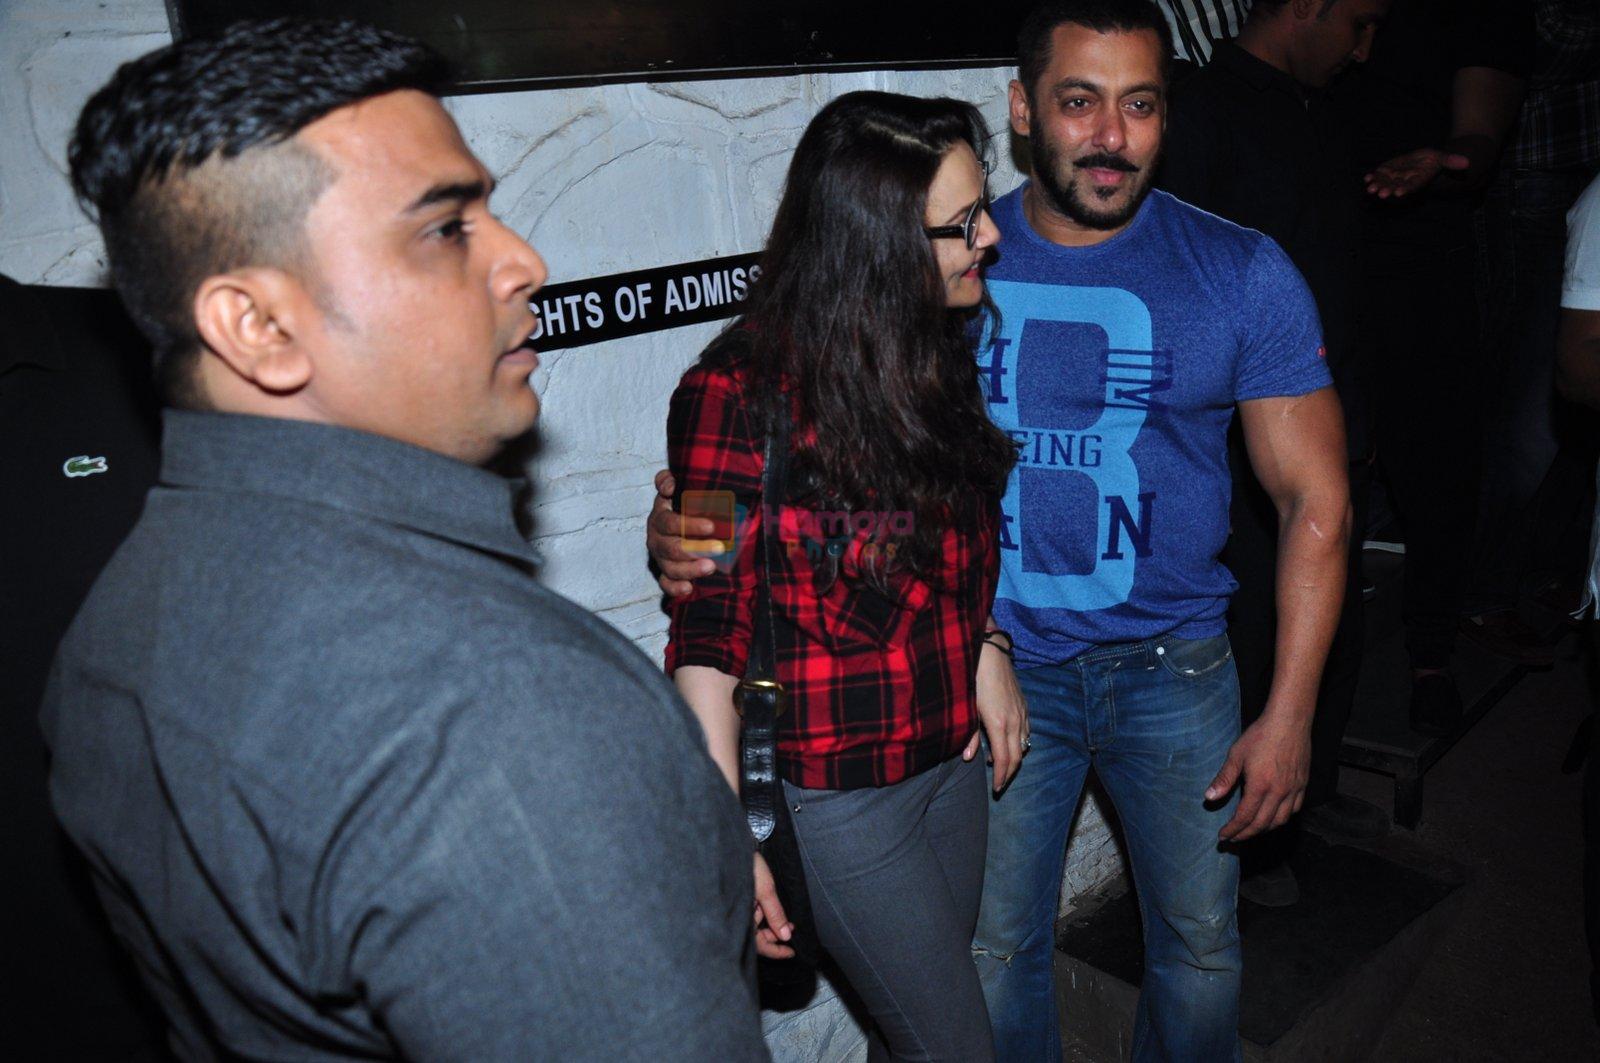 Salman Khan, Preity Zinta, Anu Dewan at The Korner House on 4th Feb 2016